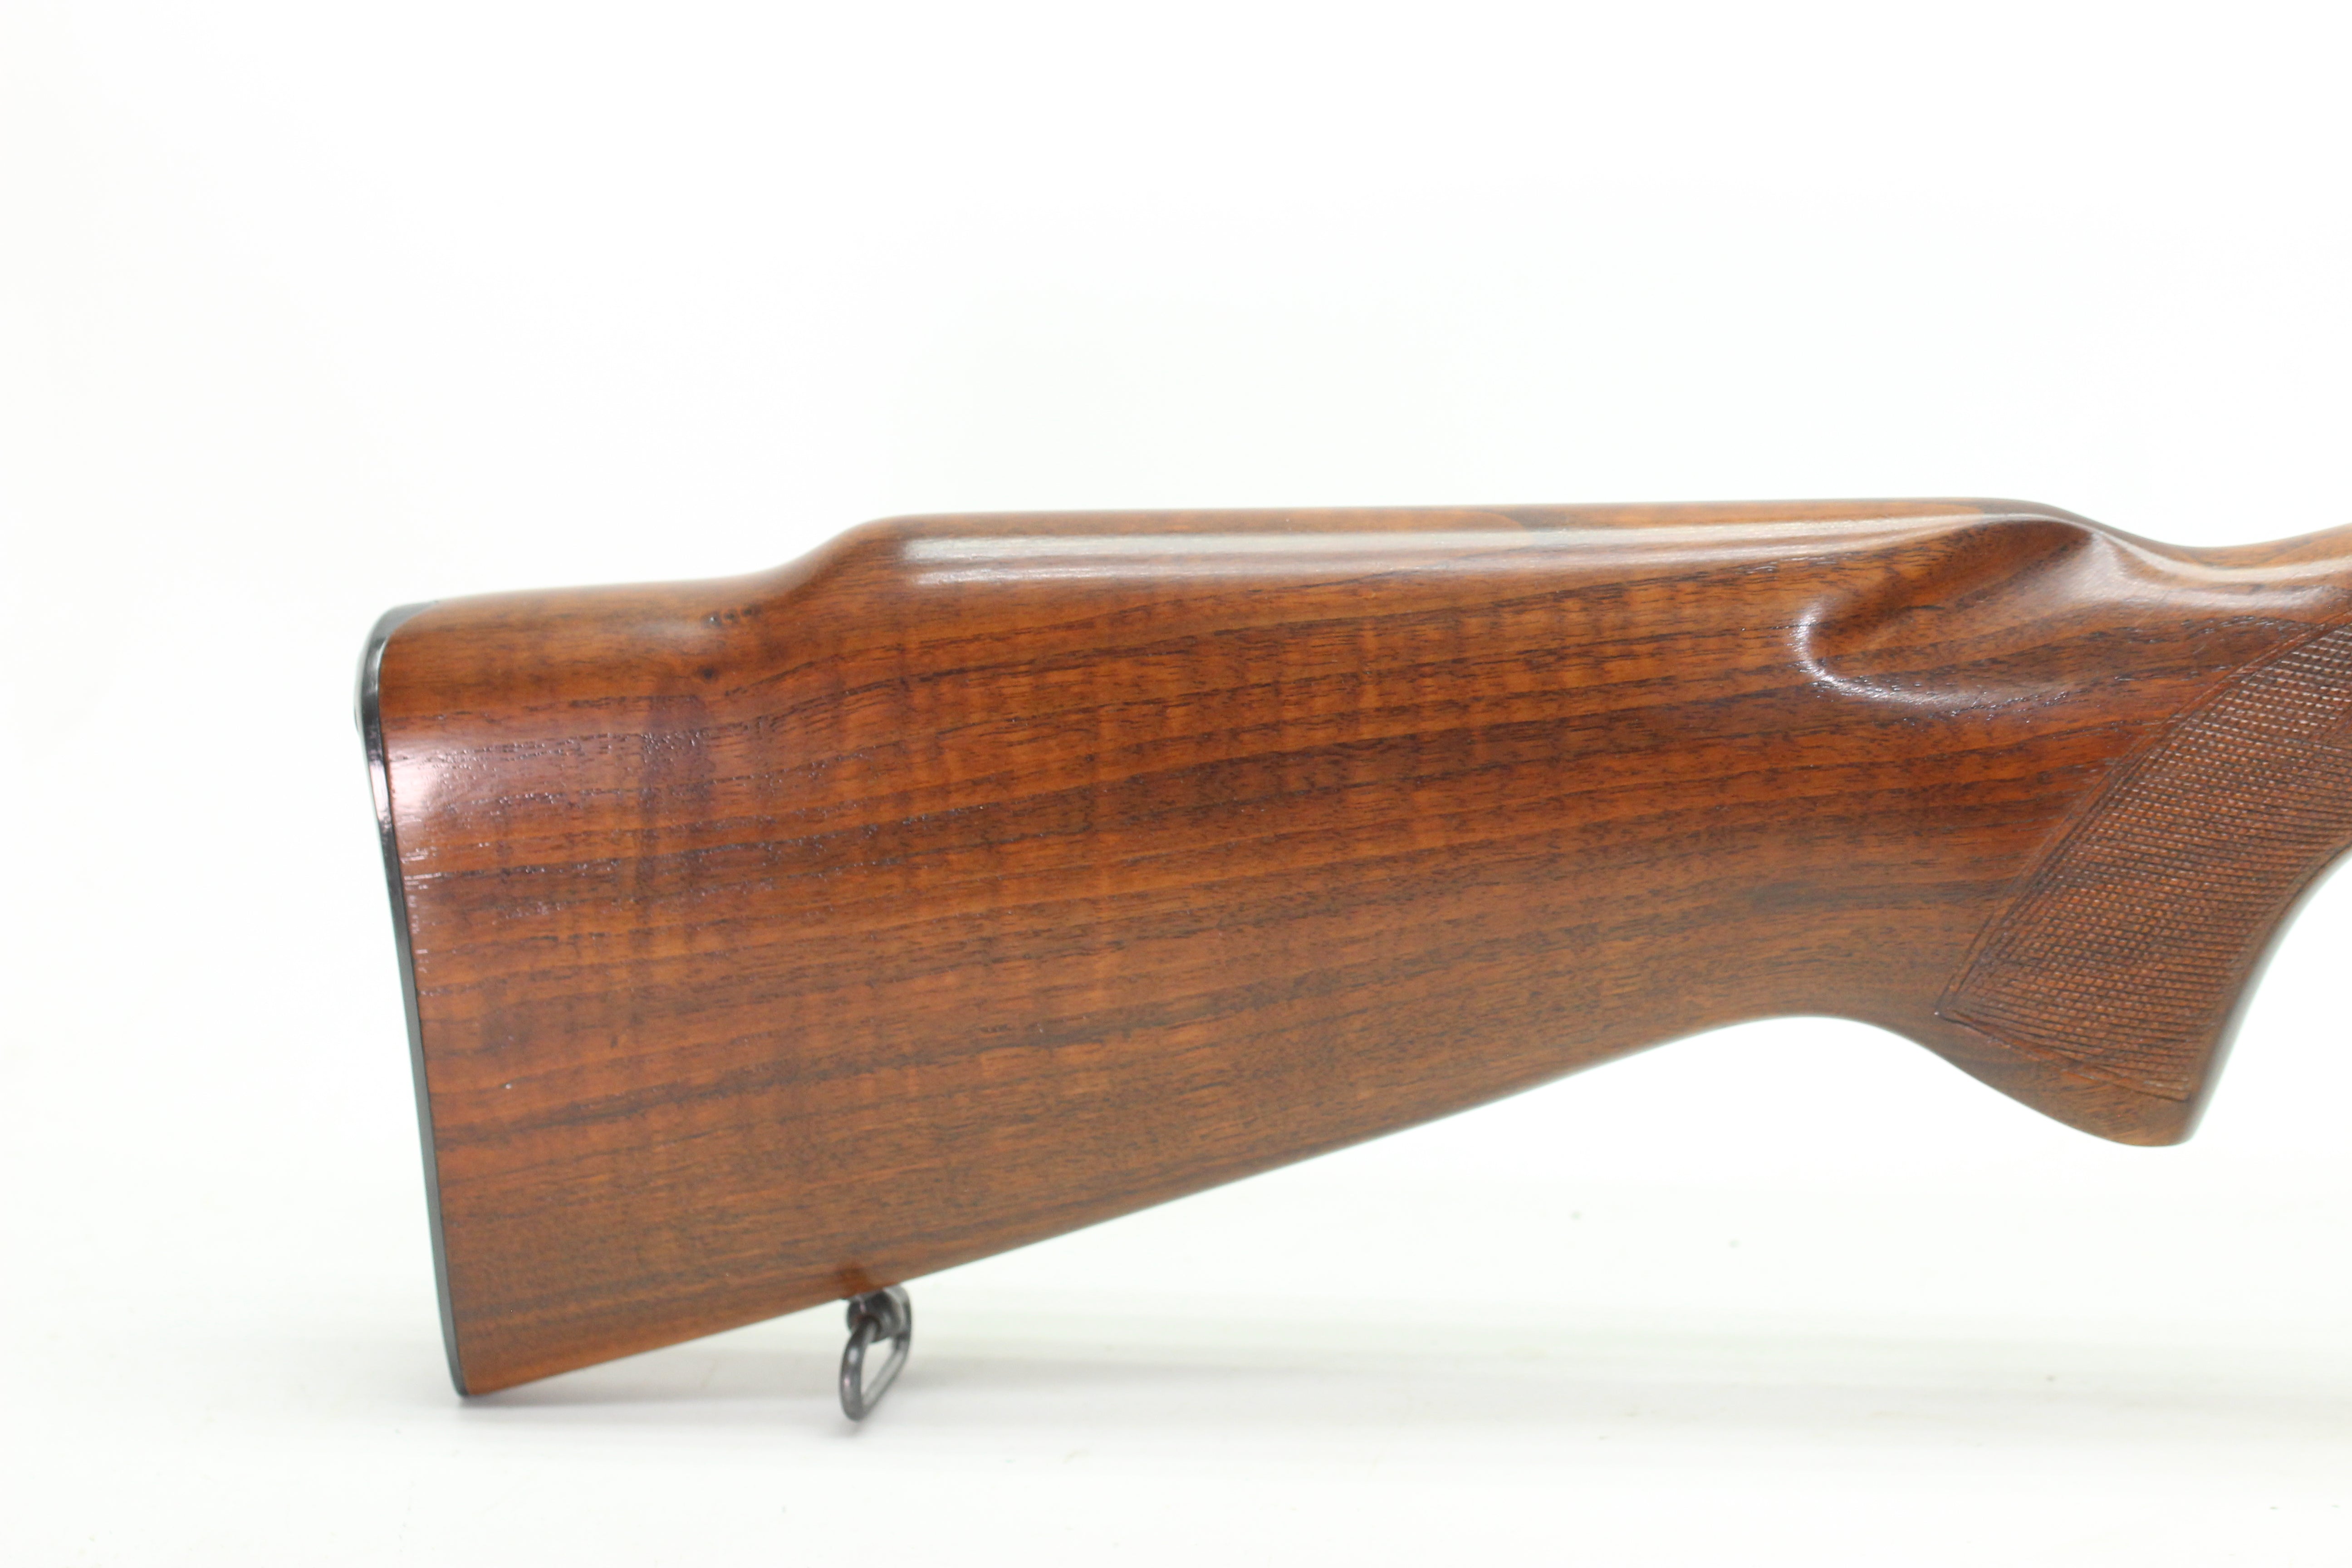 .30-06 Springfield Standard Rifle - 1951